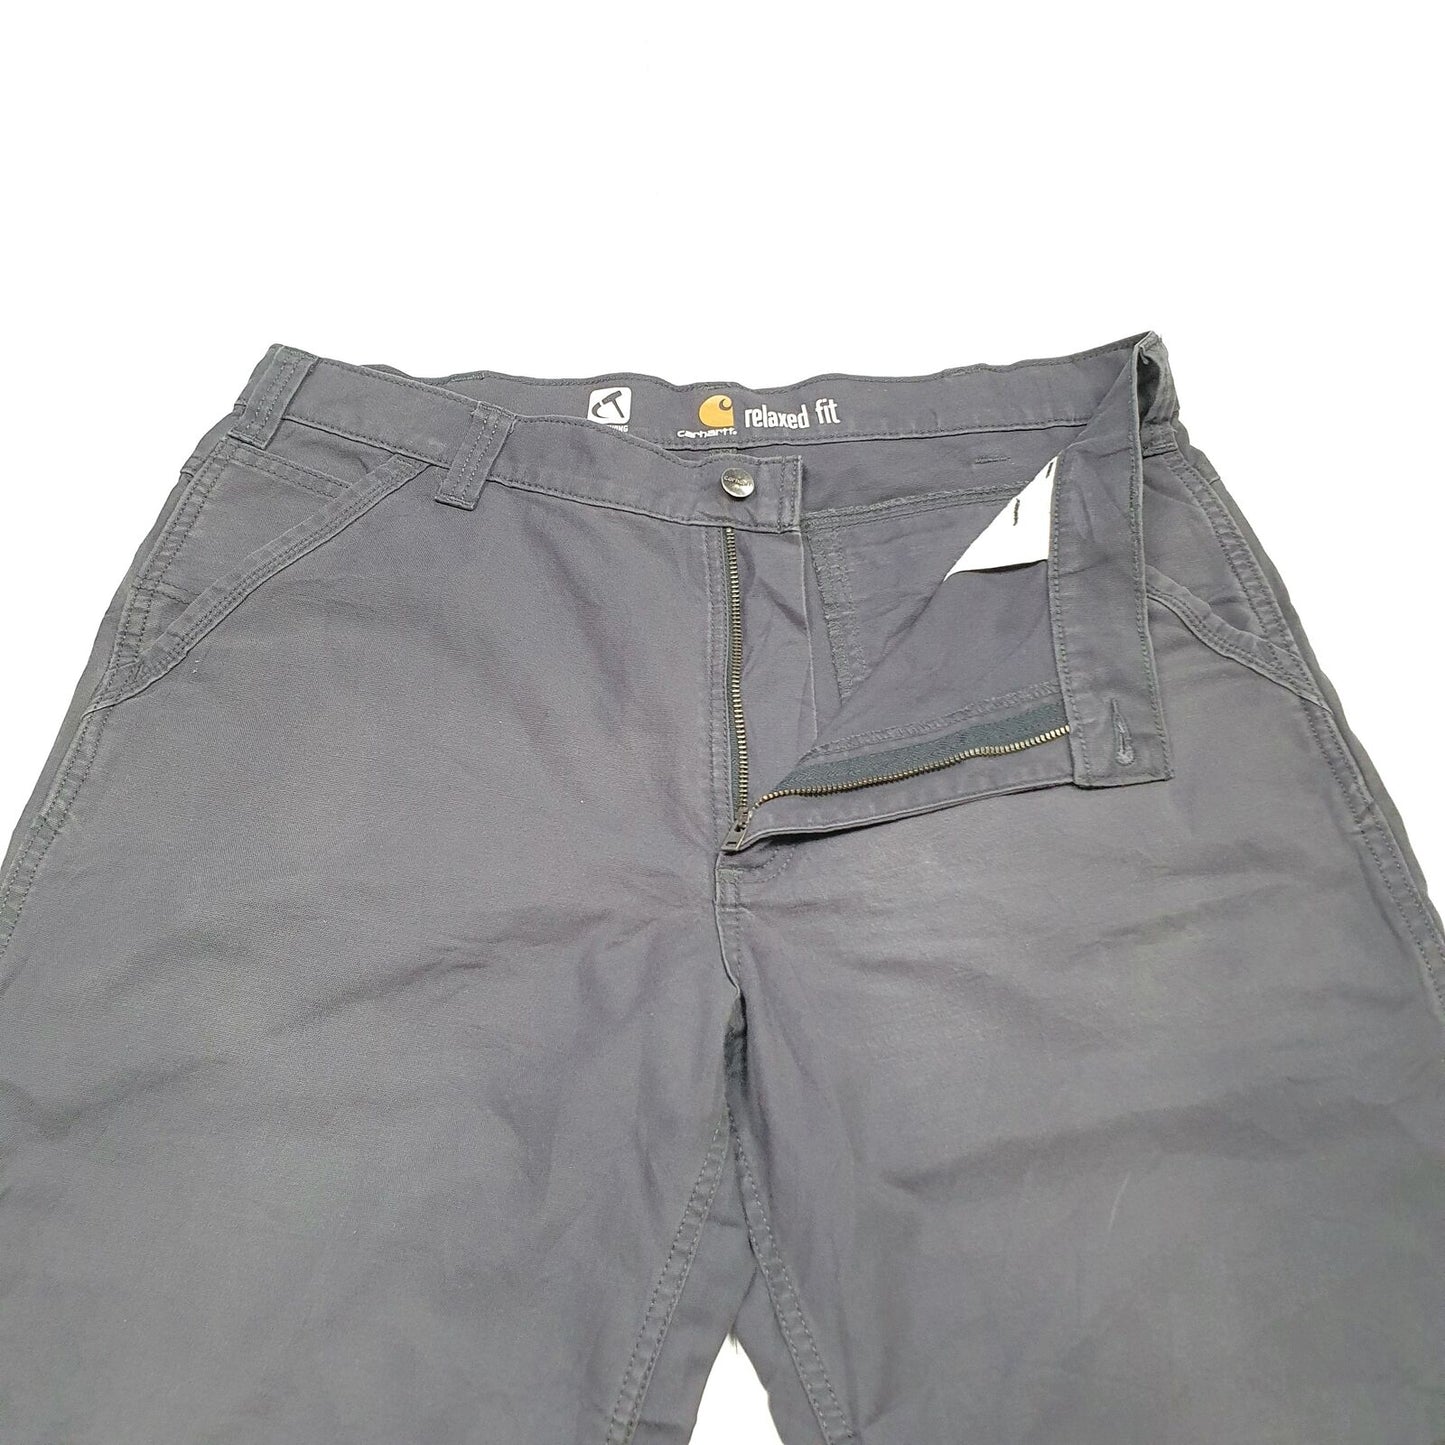 Mens CARHARTT Full Swing Cryder Grey Chino Workwear Trousers W38 L36